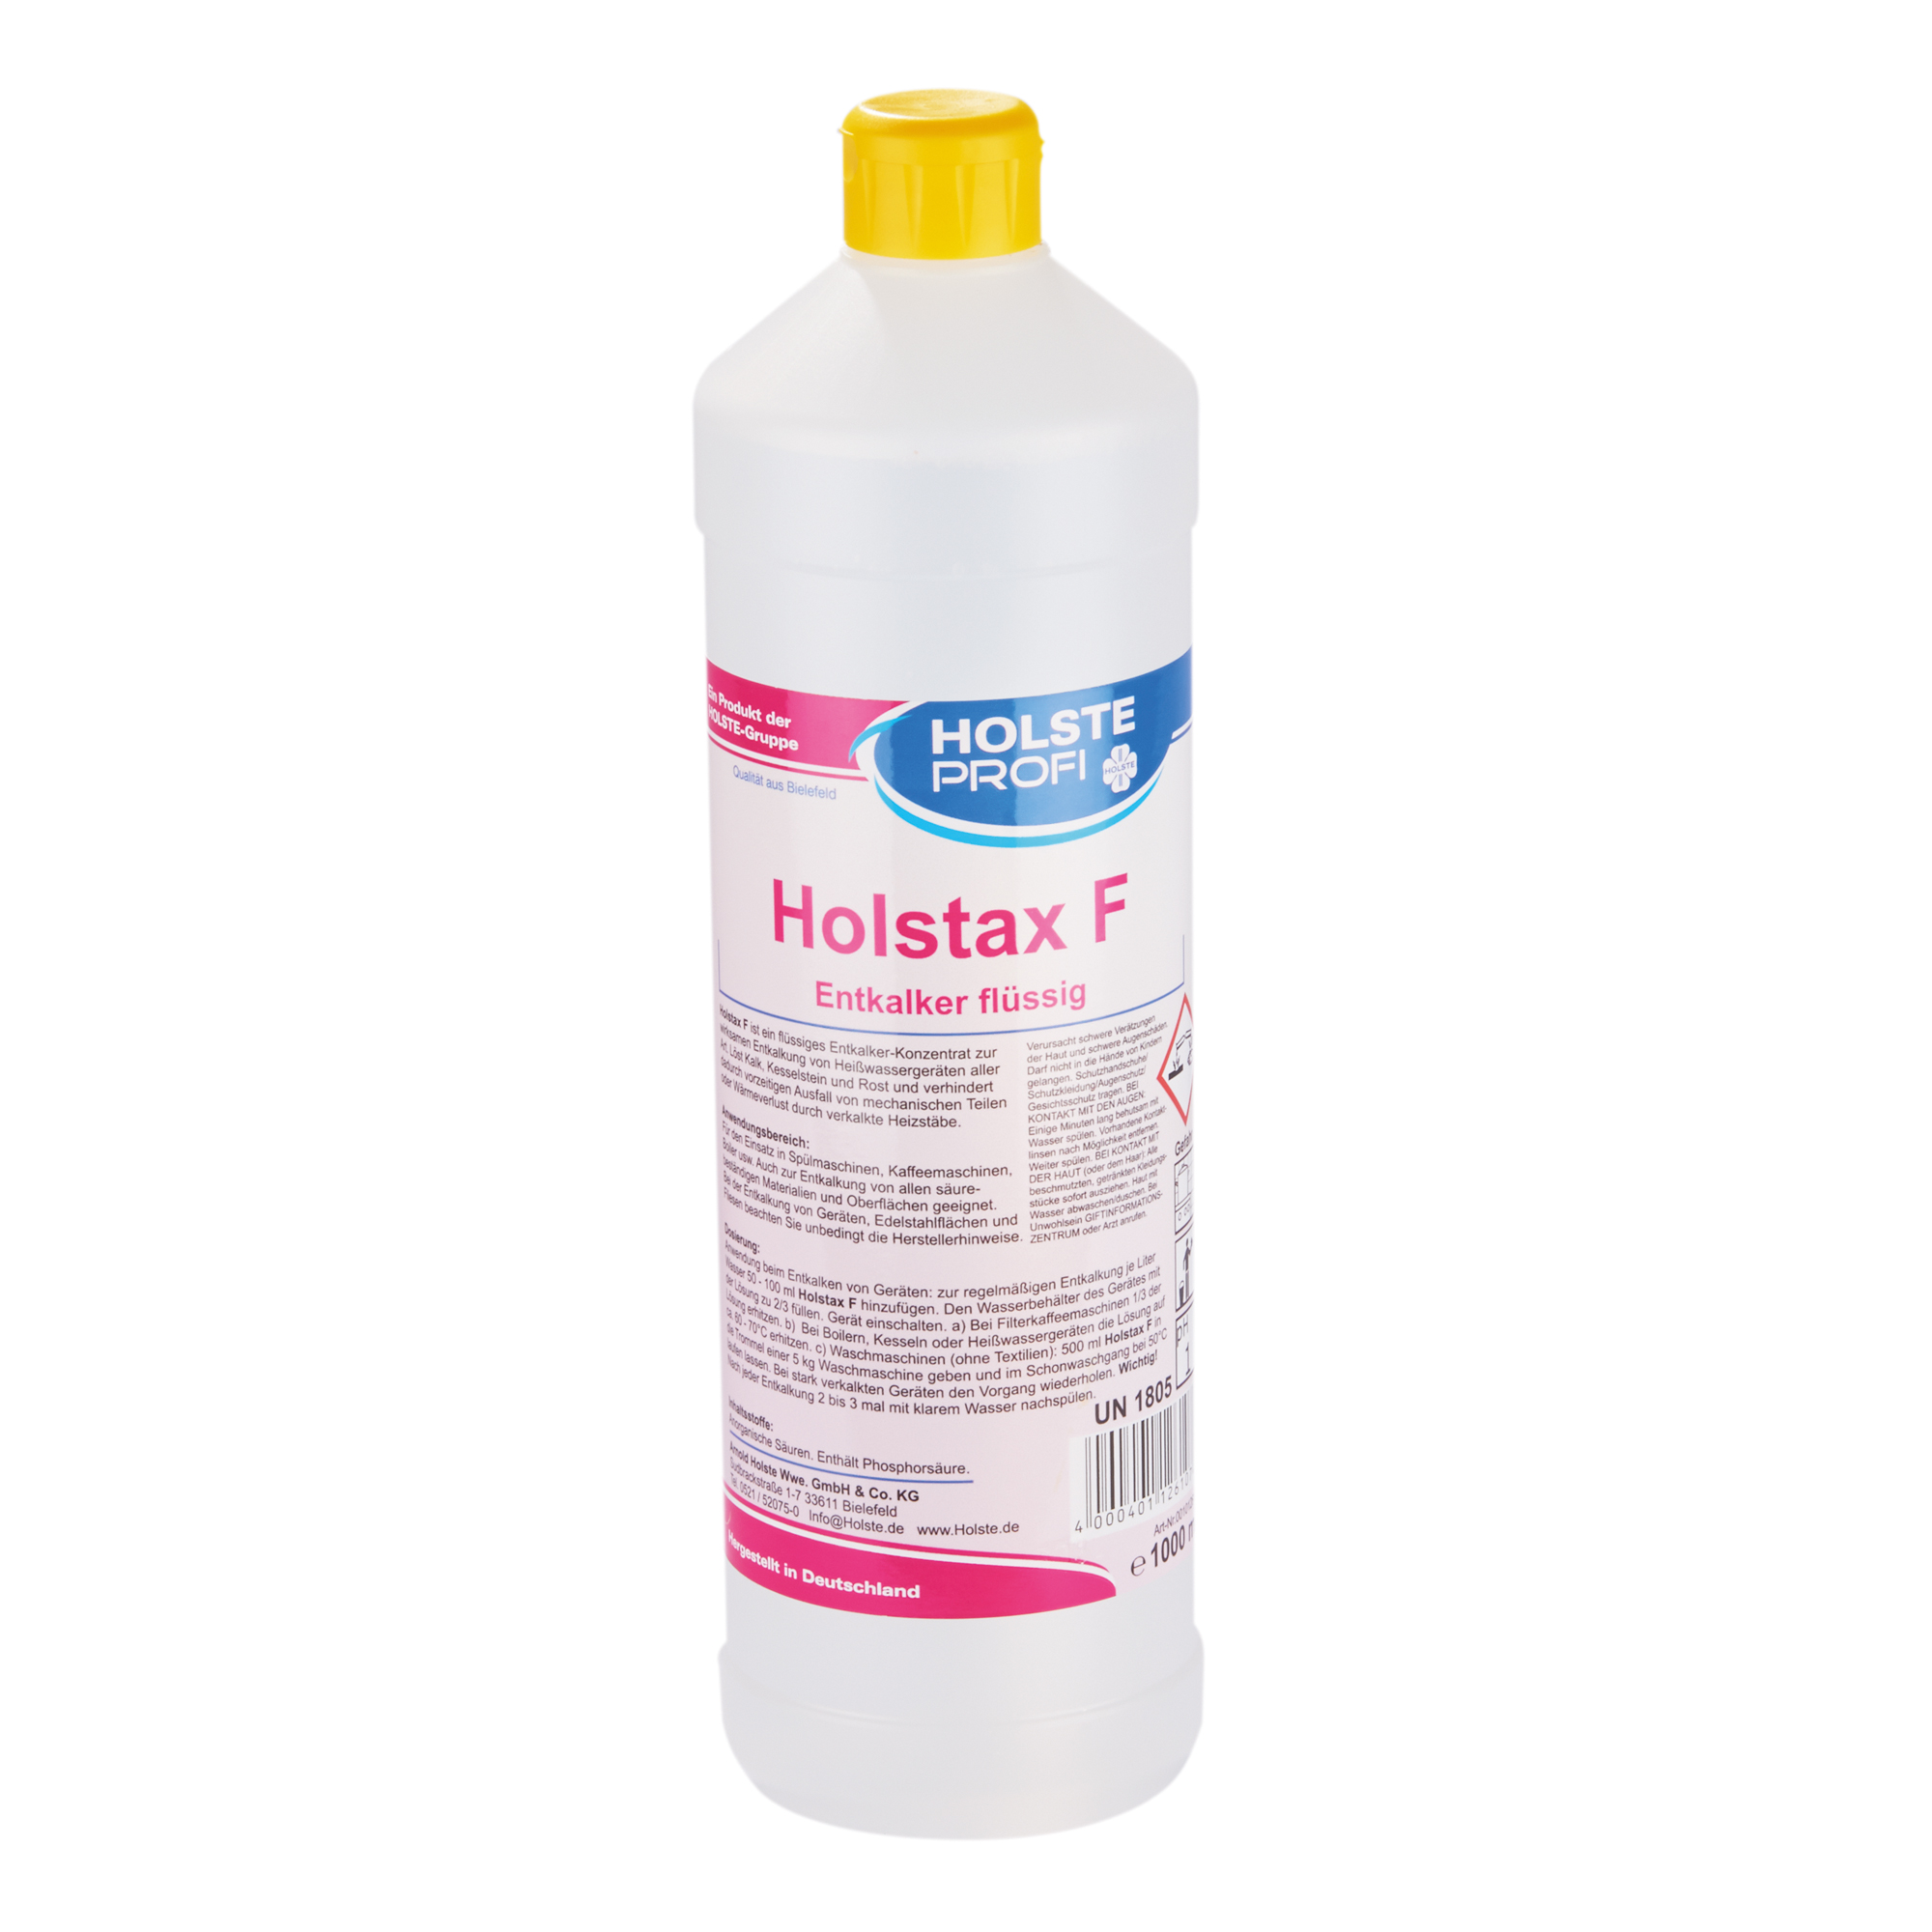 Holste Entkalker Holstax F 1 Liter Flasche 076101012-1_1